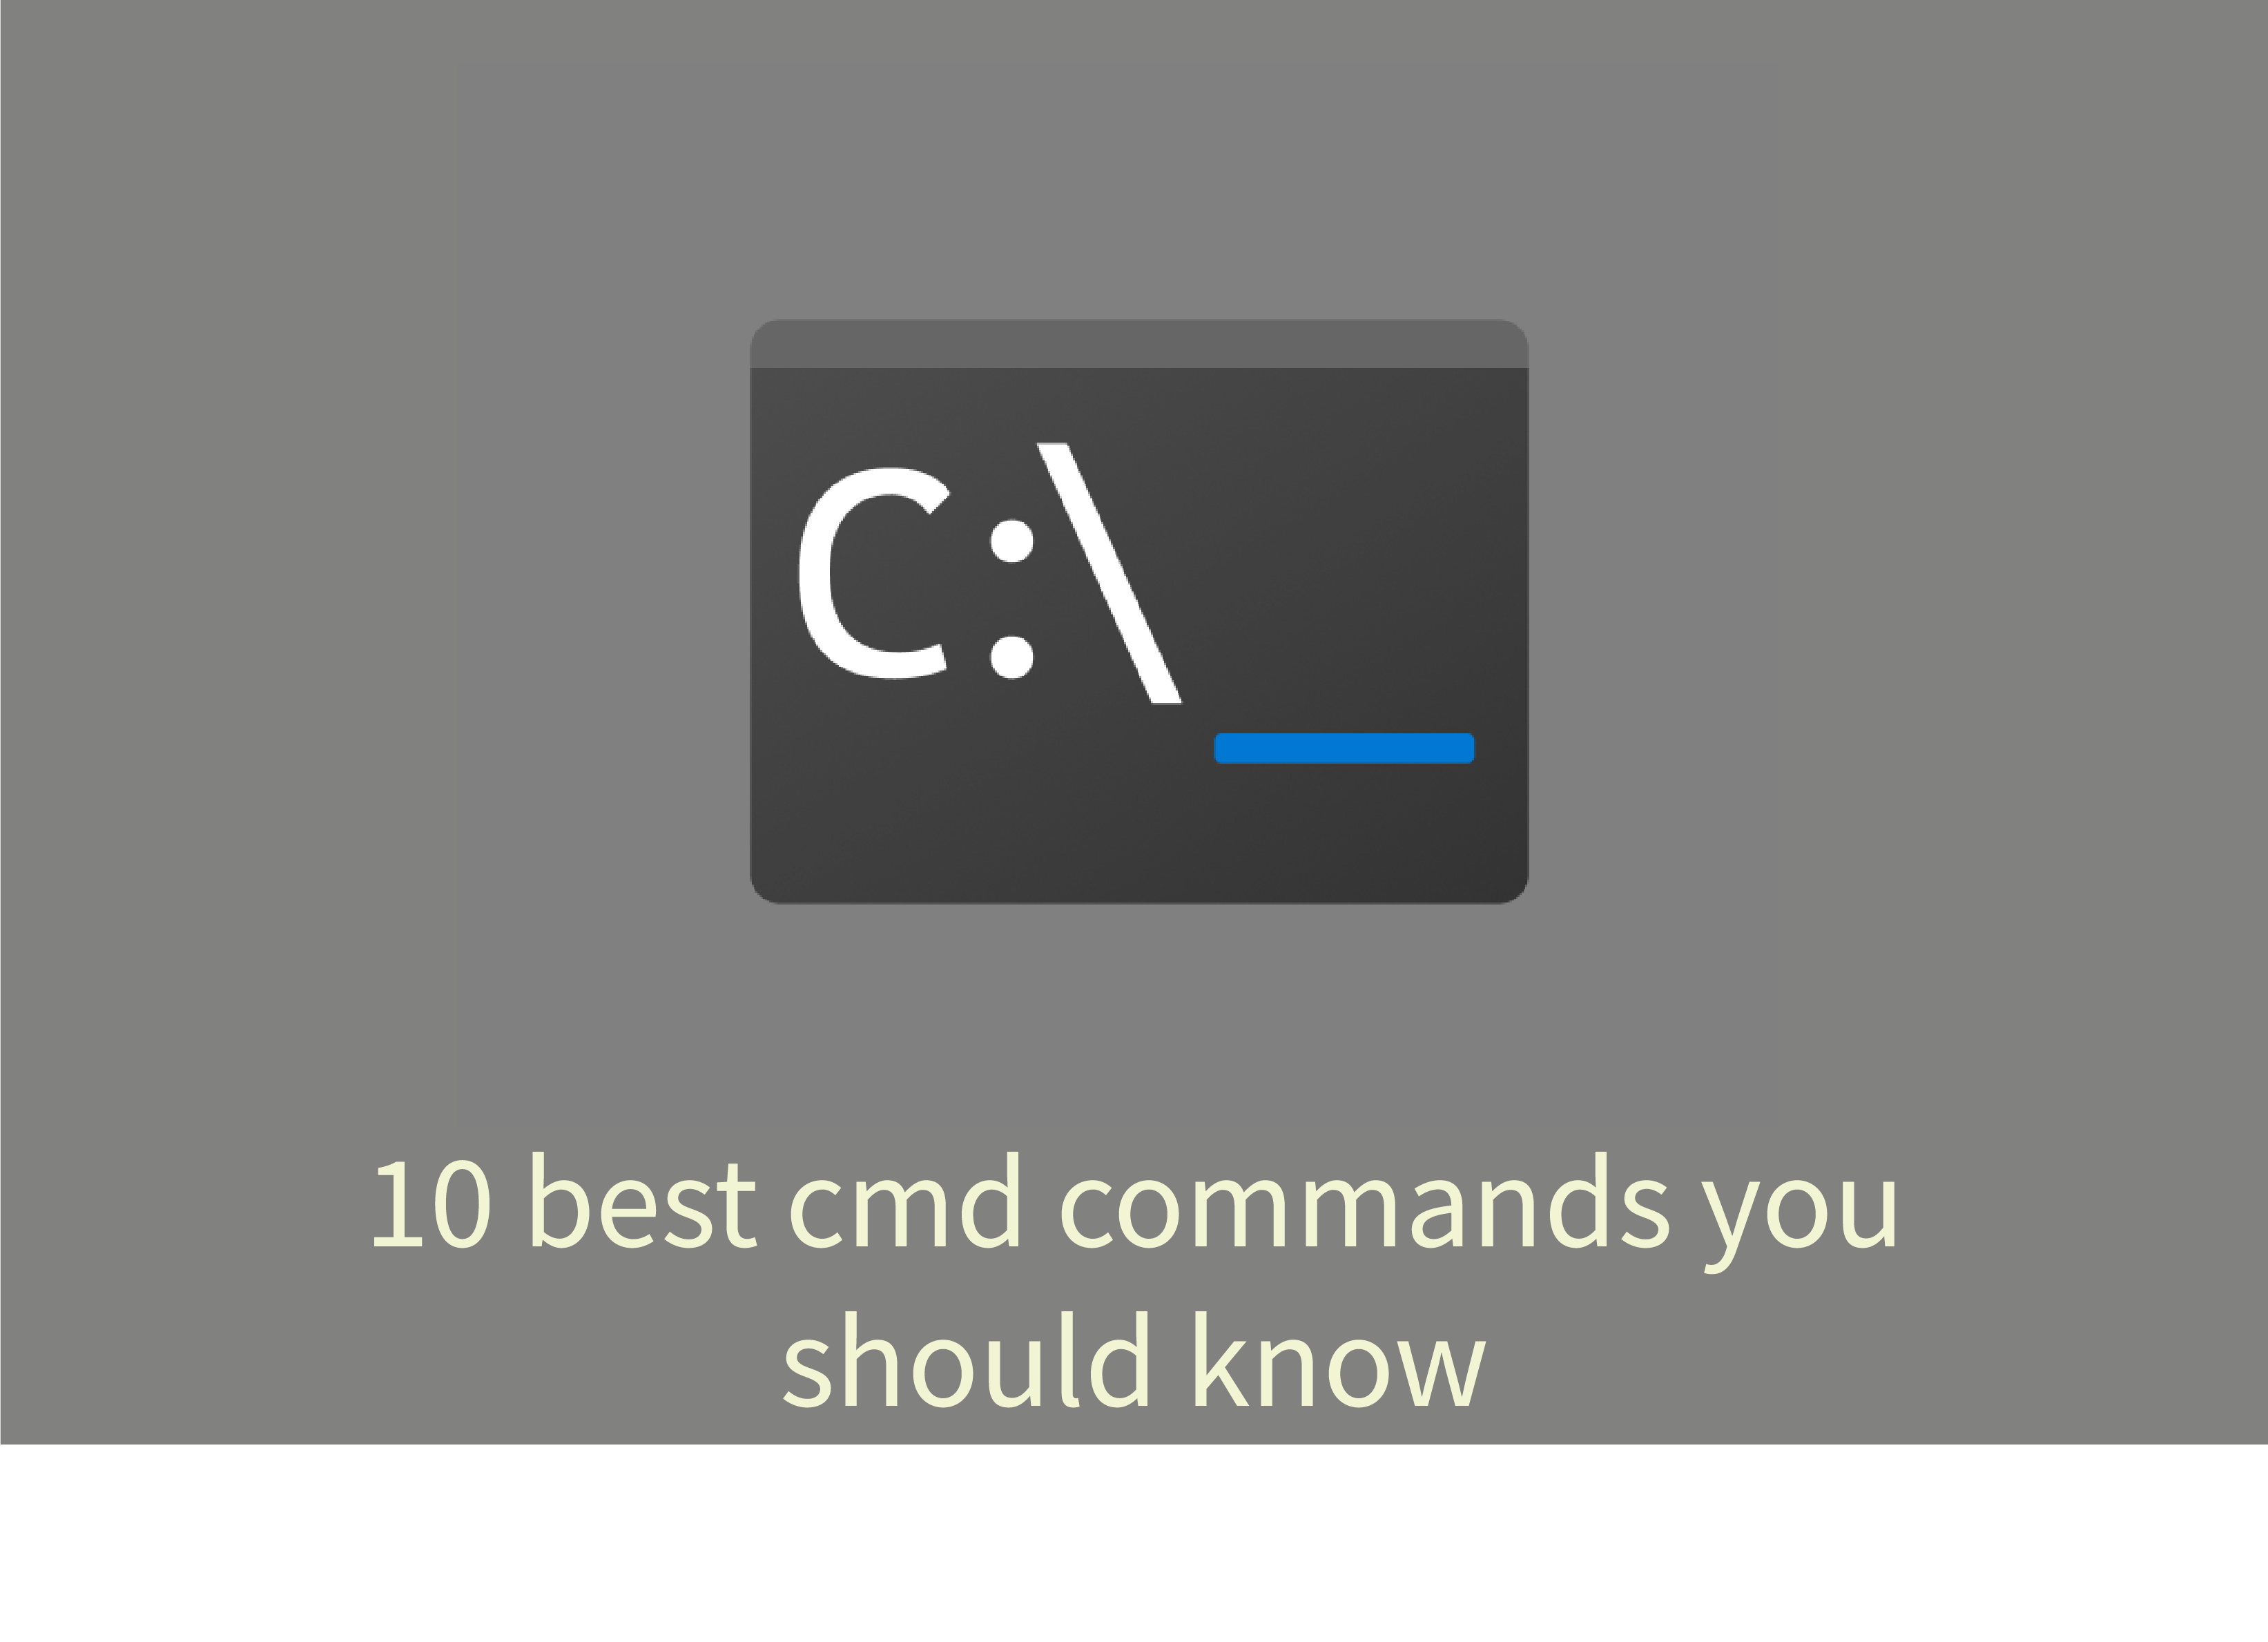 cmd commands